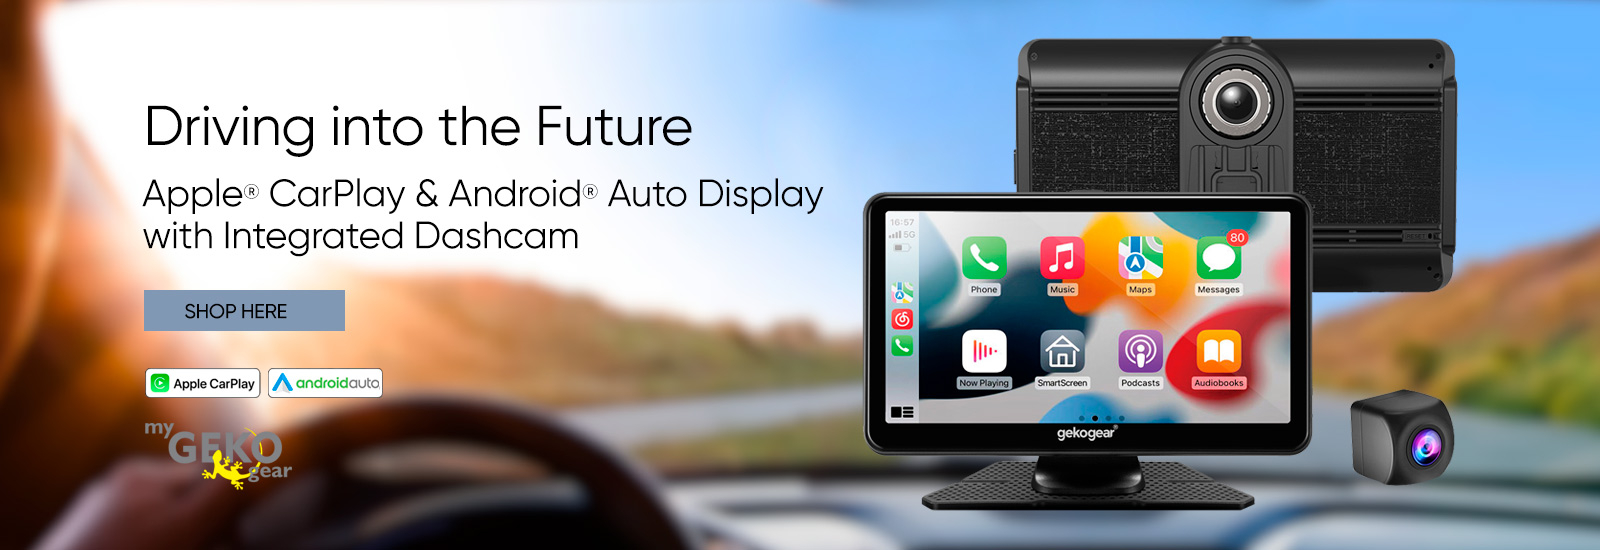 Apple CarPlay and Android Auto display